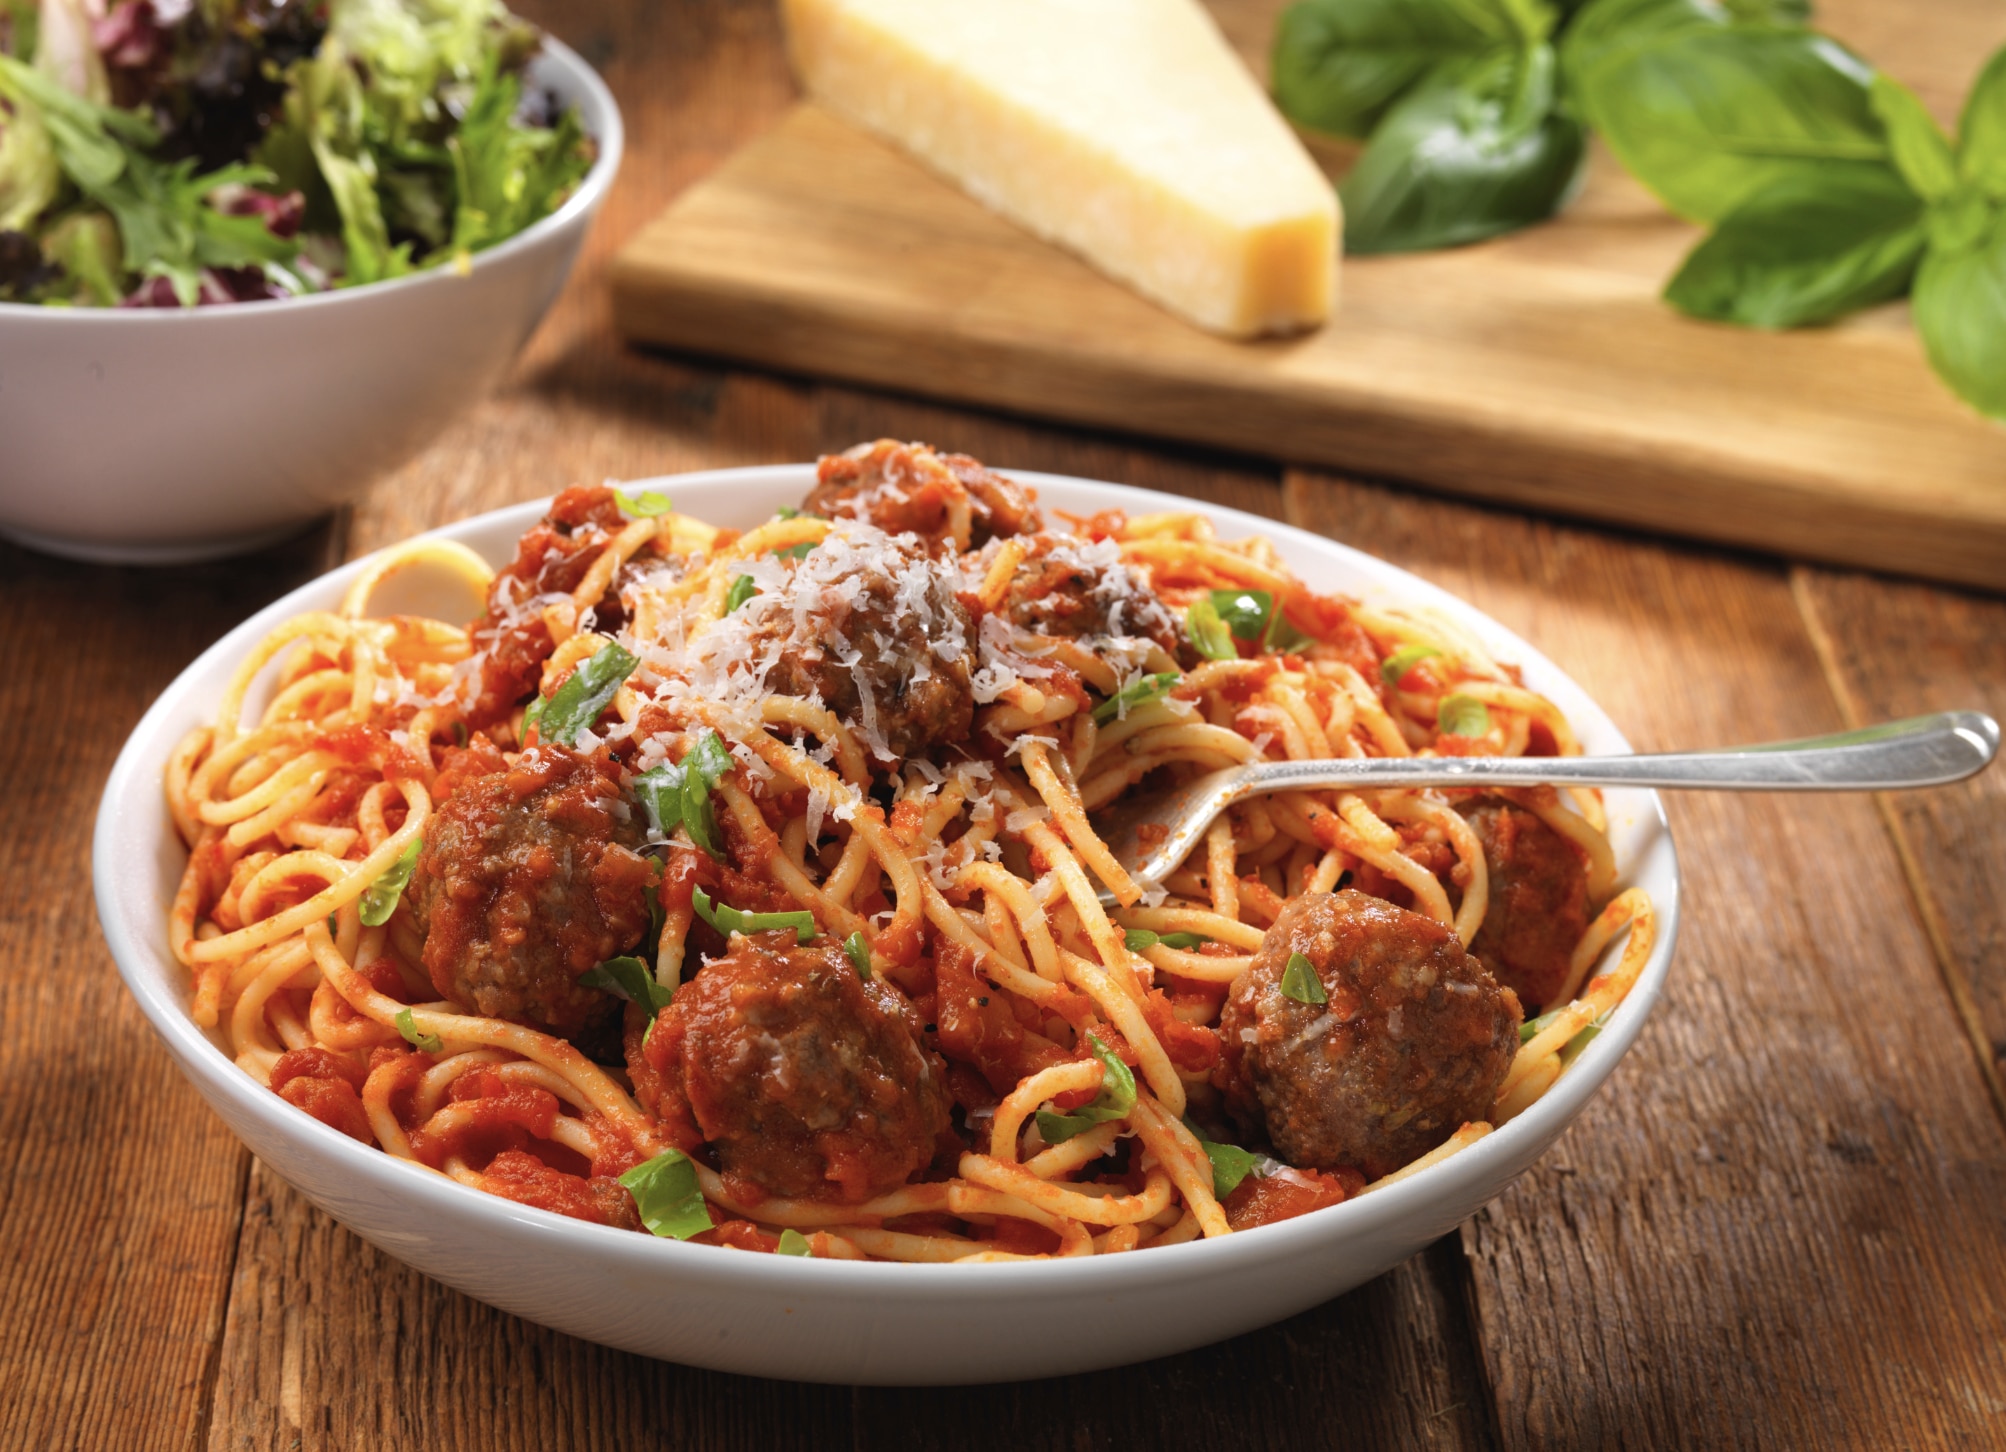 Indulge in the Classic Italian-style Spaghetti and Meatballs Recipe